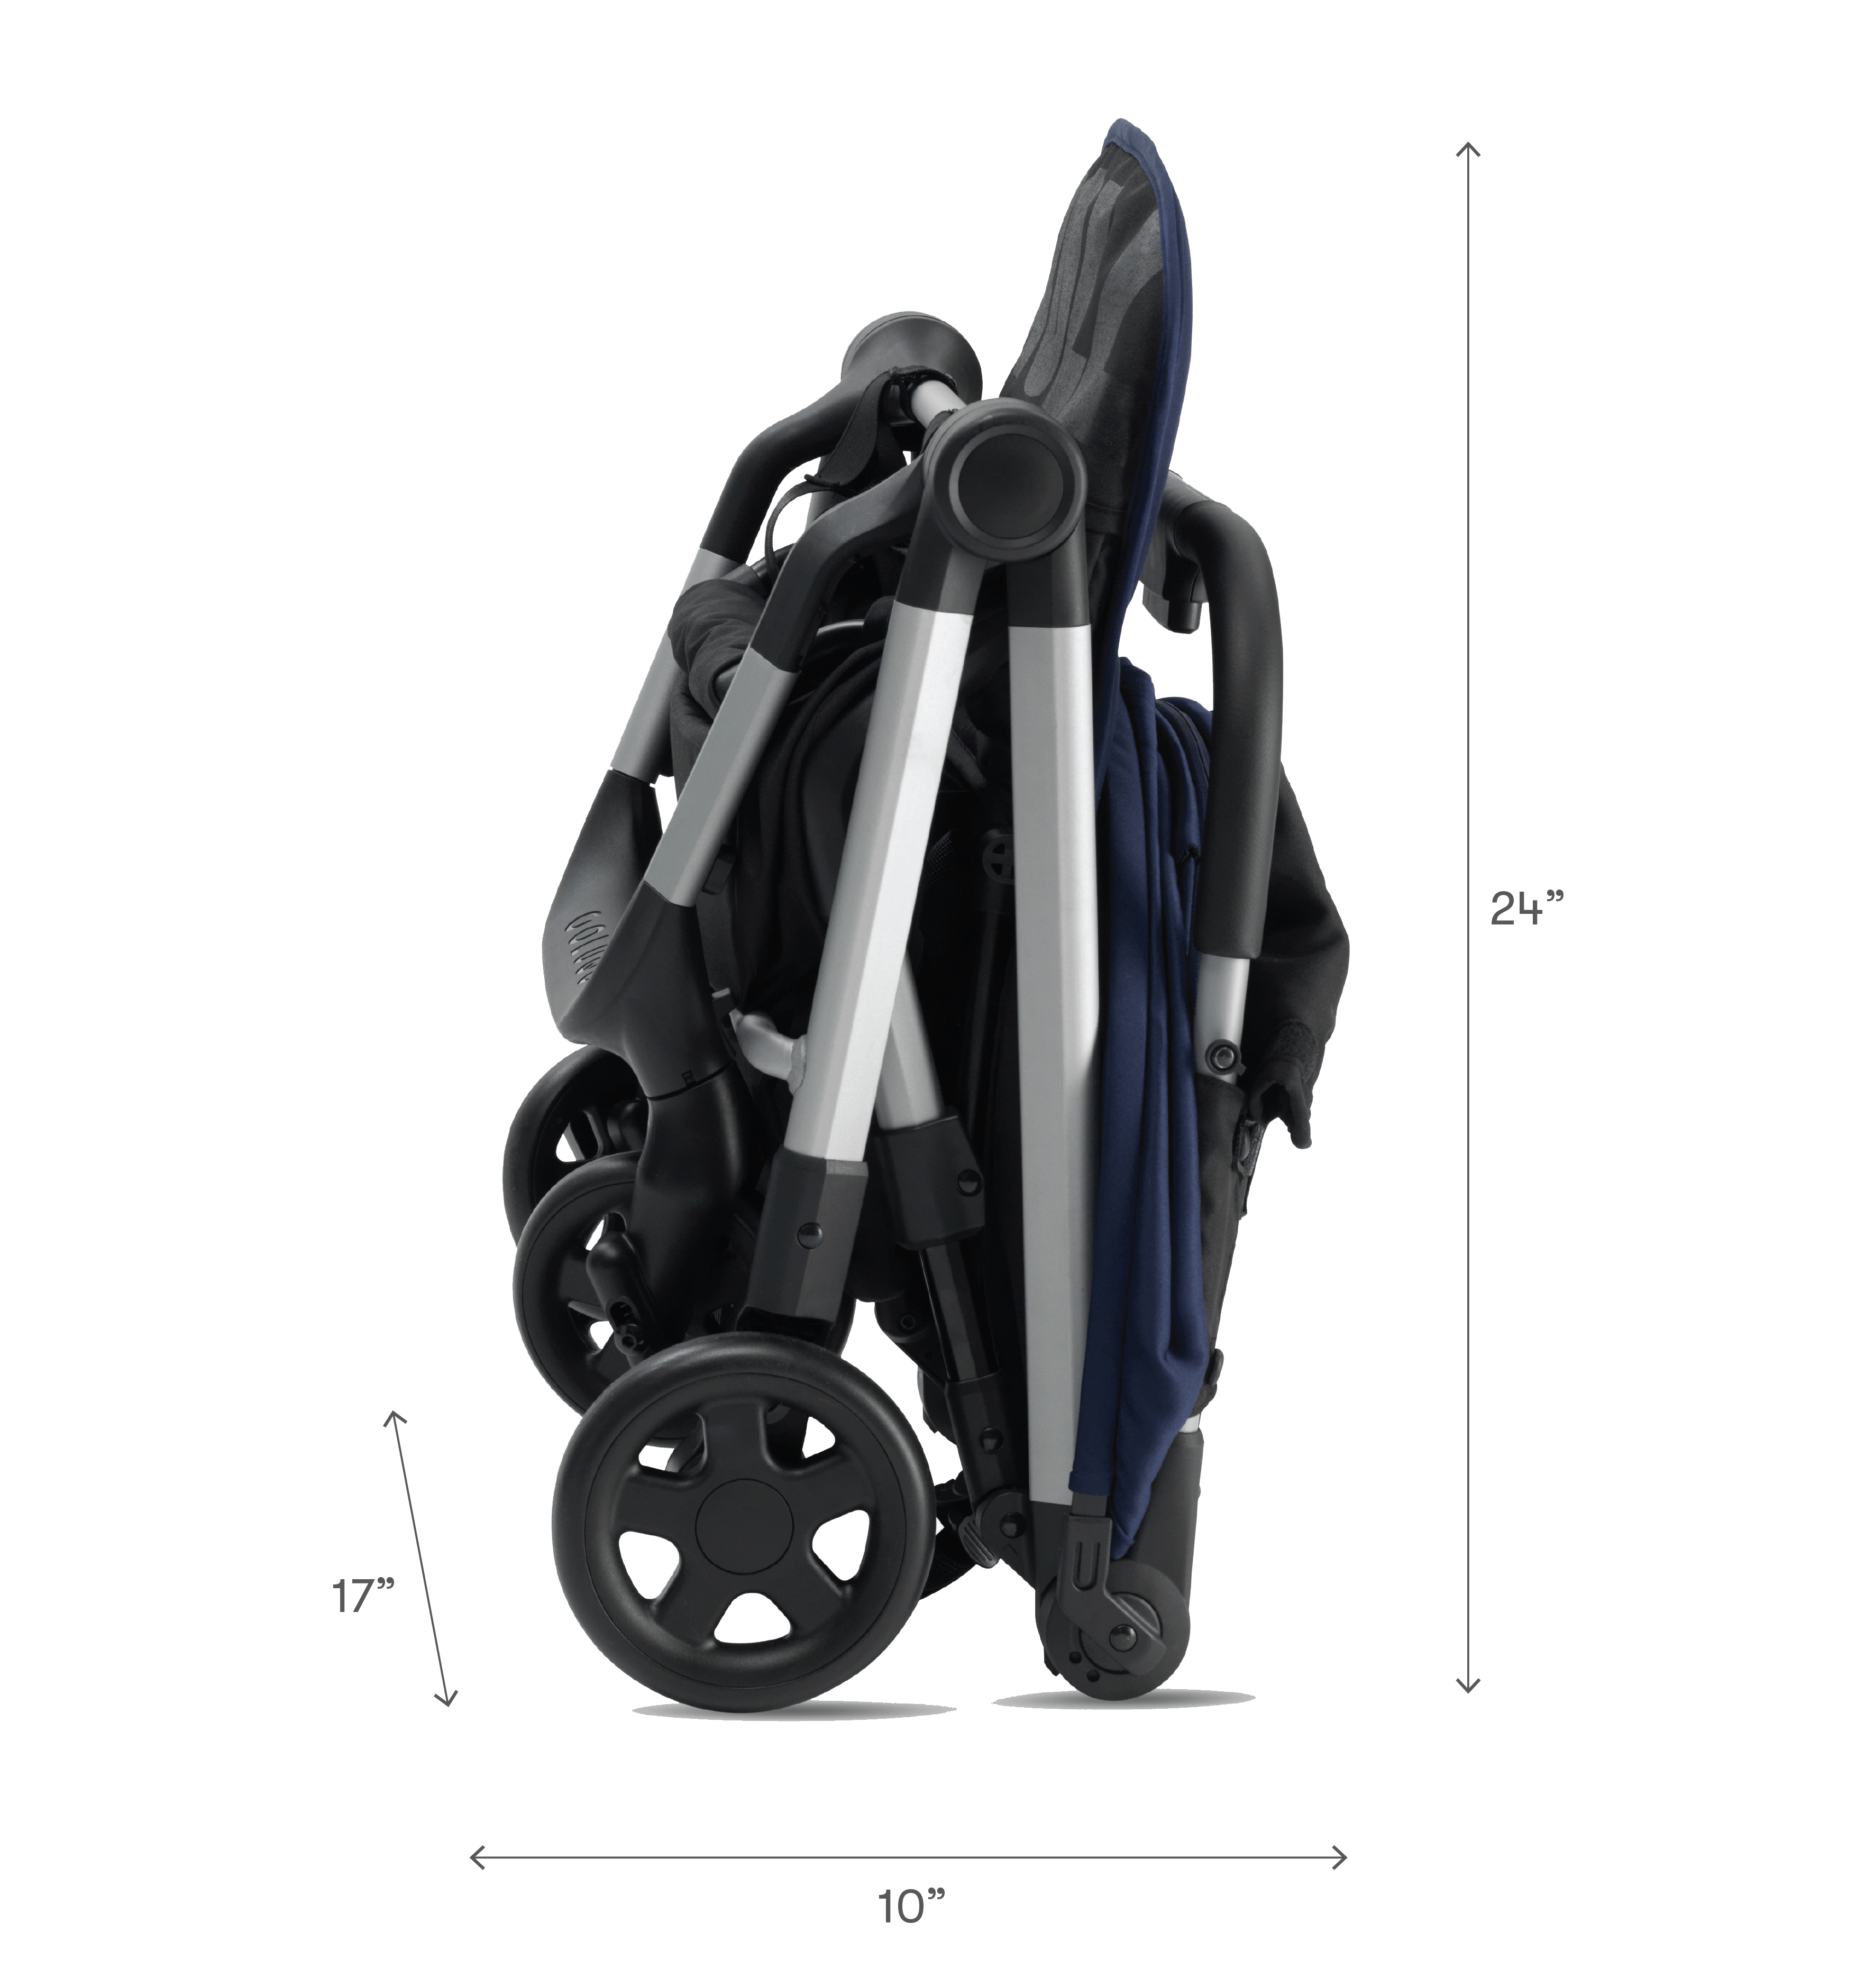 folding stroller in your backpack